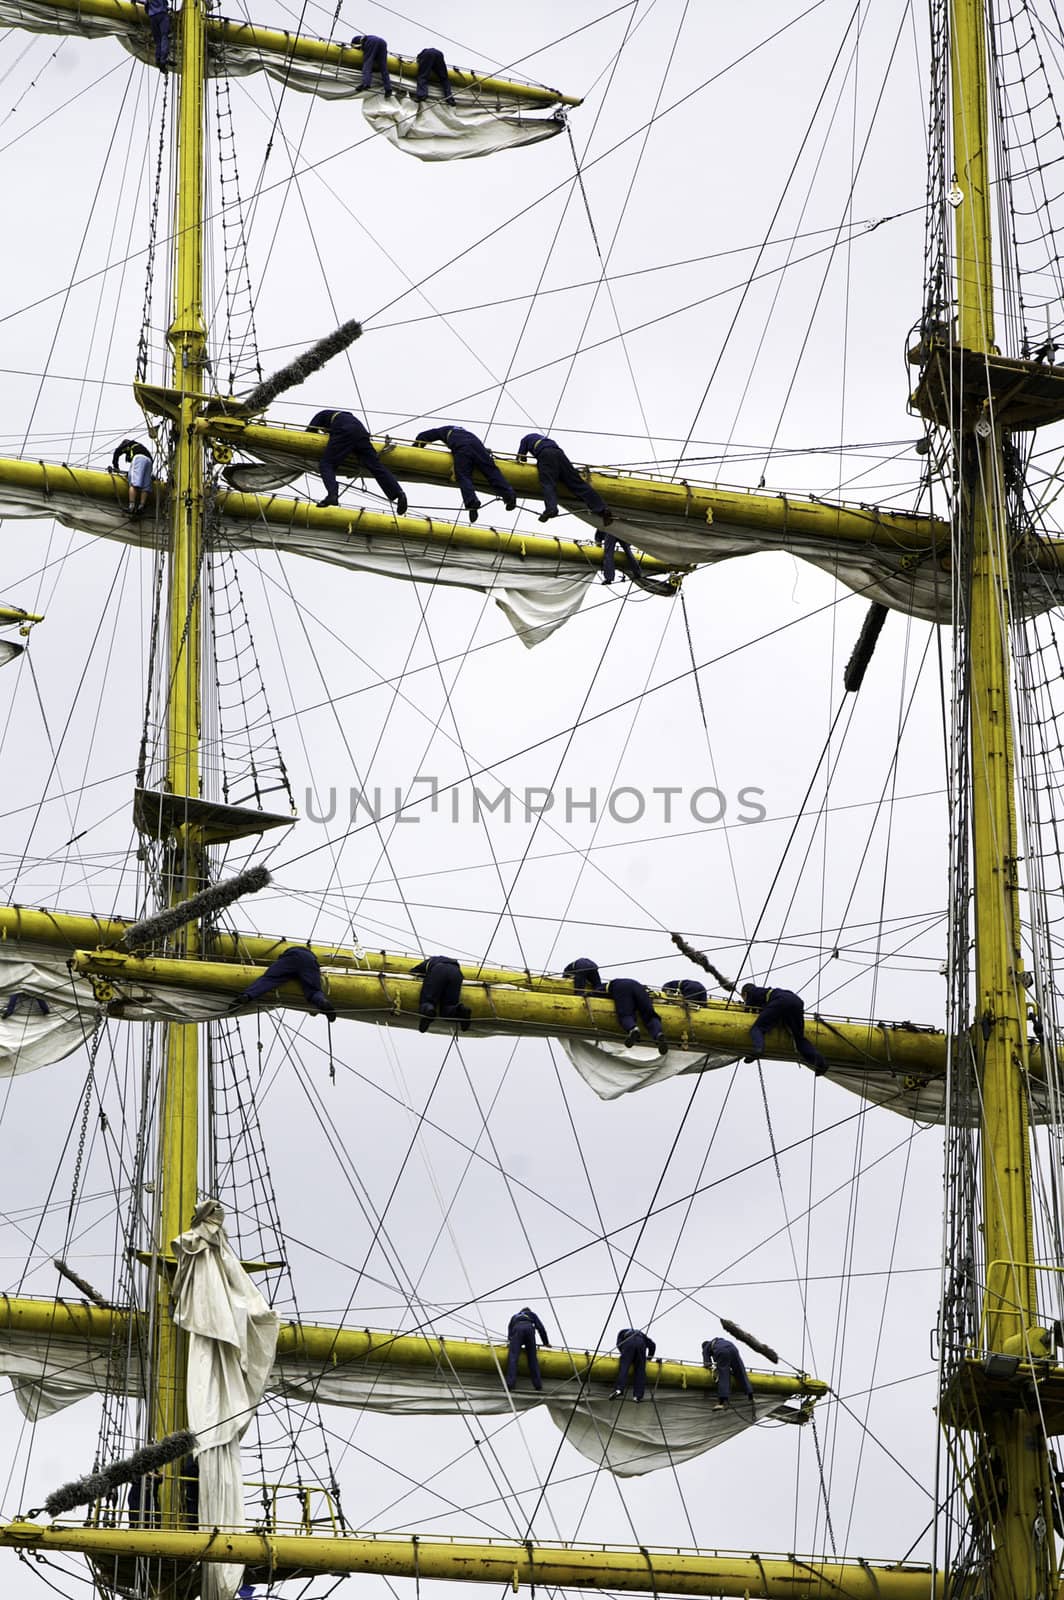 Many sailors hoisting sails at an international tall ship festival in Korea